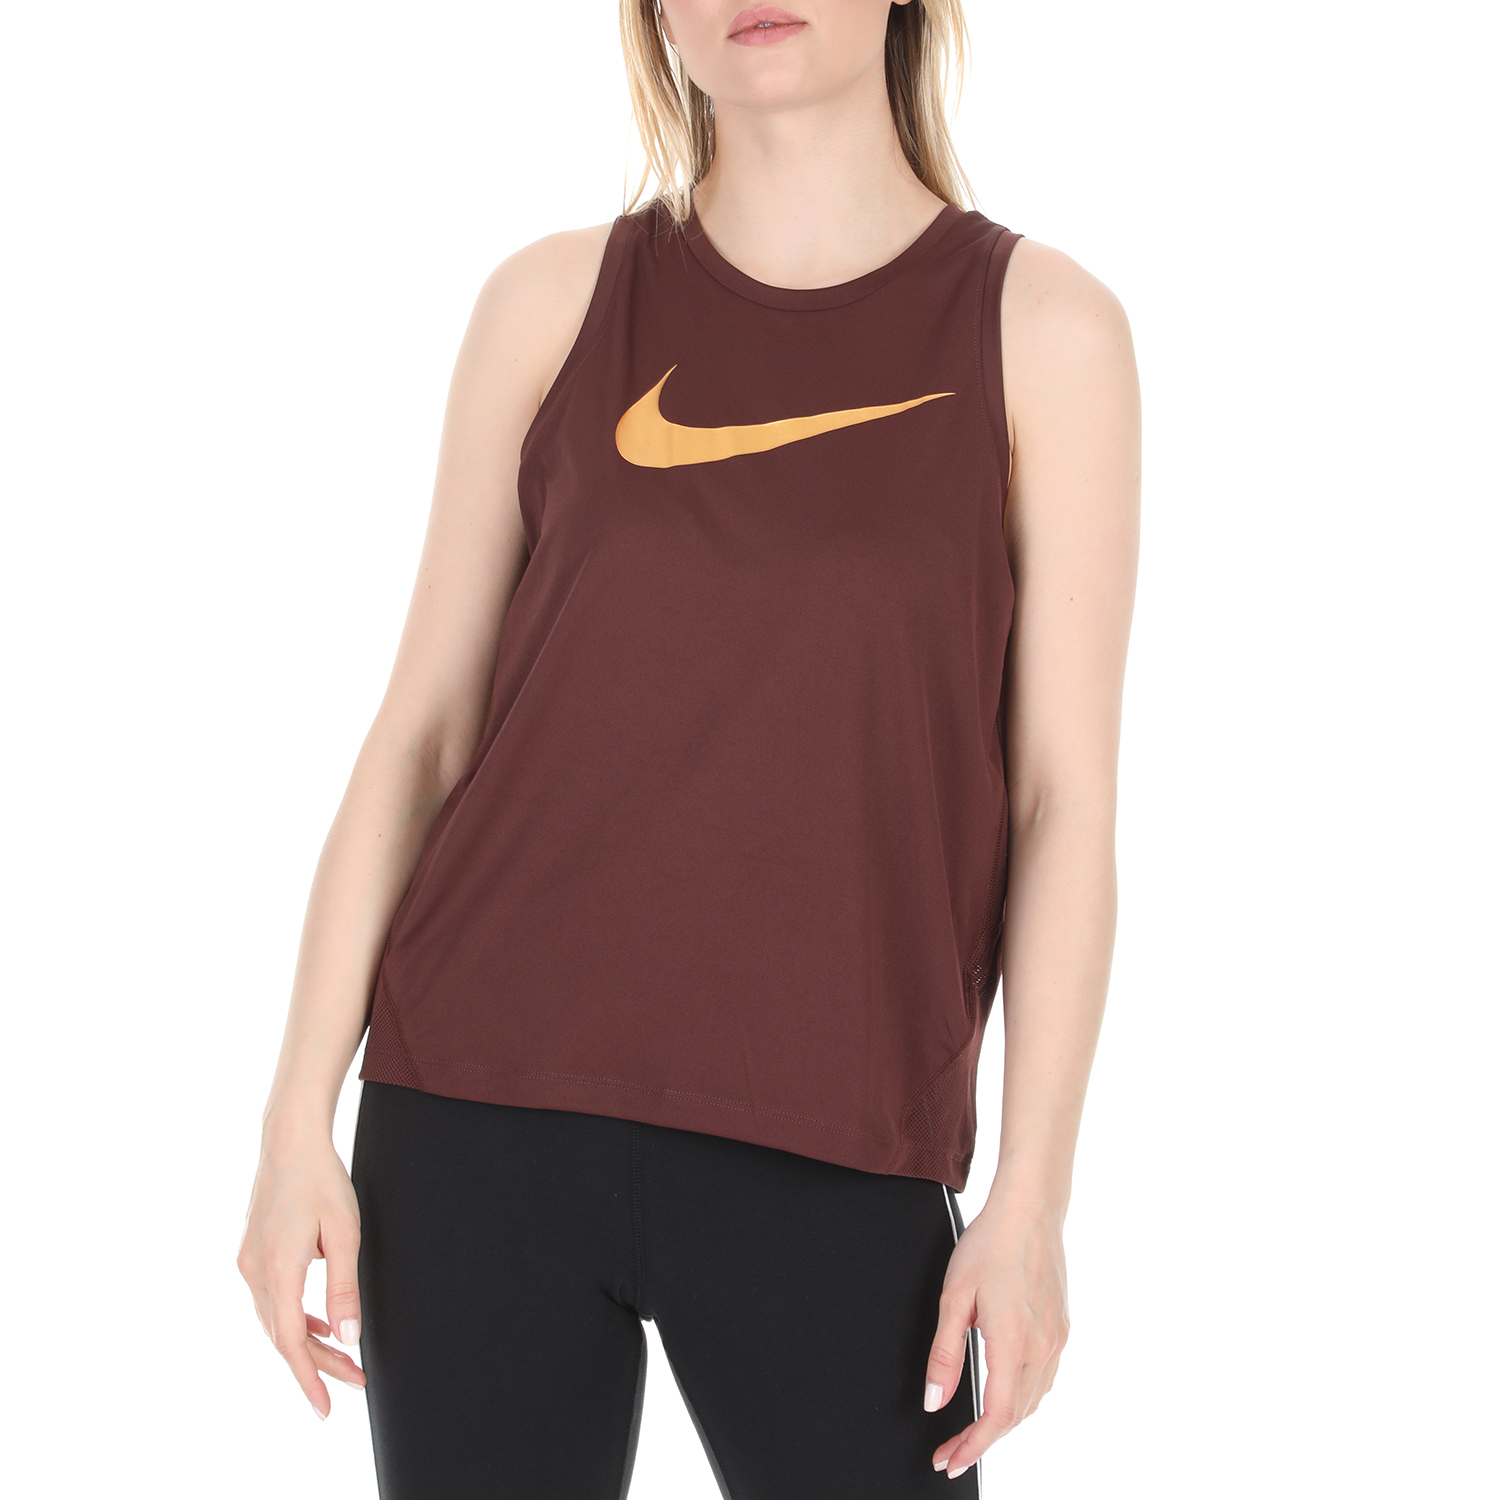 NIKE - Γυναικείο φανελάκι Nike Miler Women's Running Tan καφέ Γυναικεία/Ρούχα/Αθλητικά/T-shirt-Τοπ